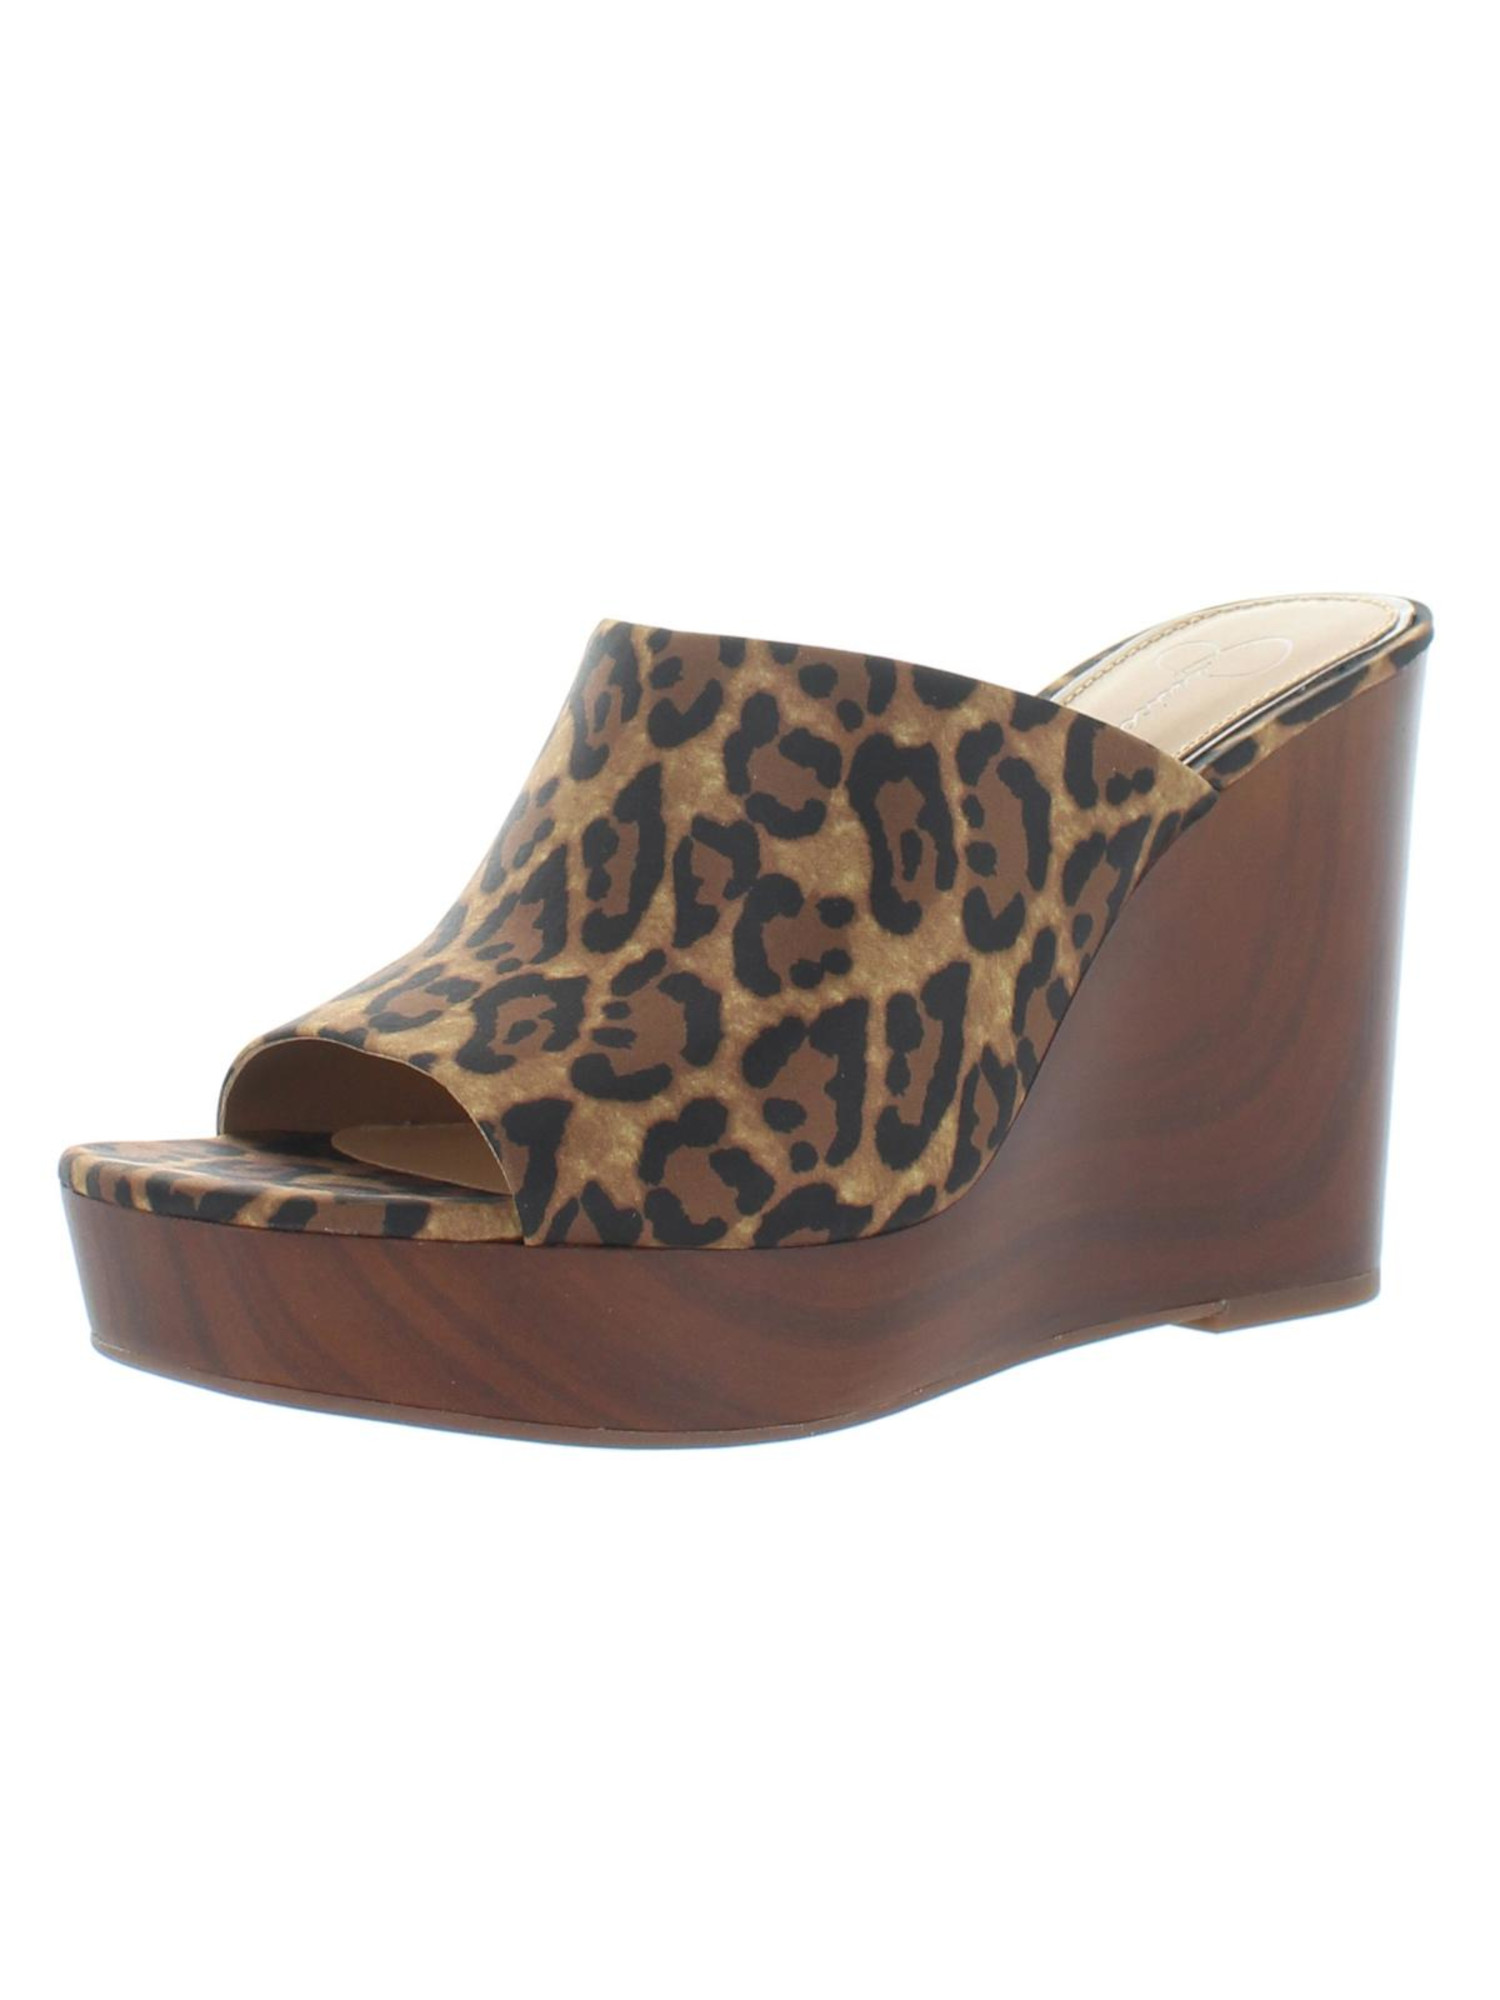 JESSICA SIMPSON Womens Brown Animal Print Leopard Comfort Shantelle Square Toe Slip On Slide Sandals 9.5 M